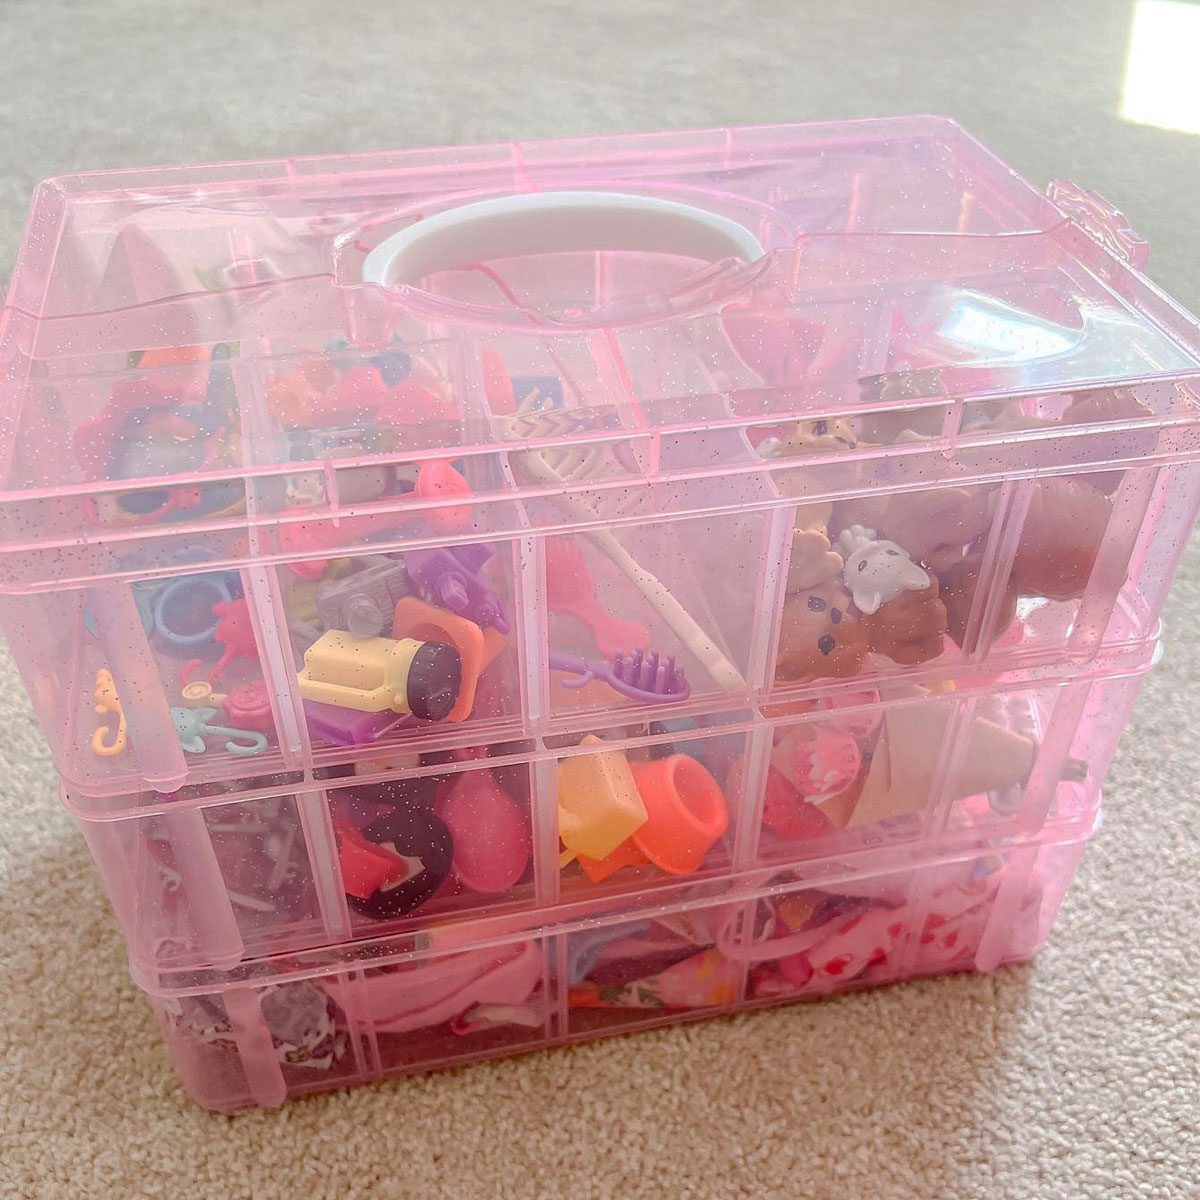 Barbie Storage Solution — Sorted Em Organizing